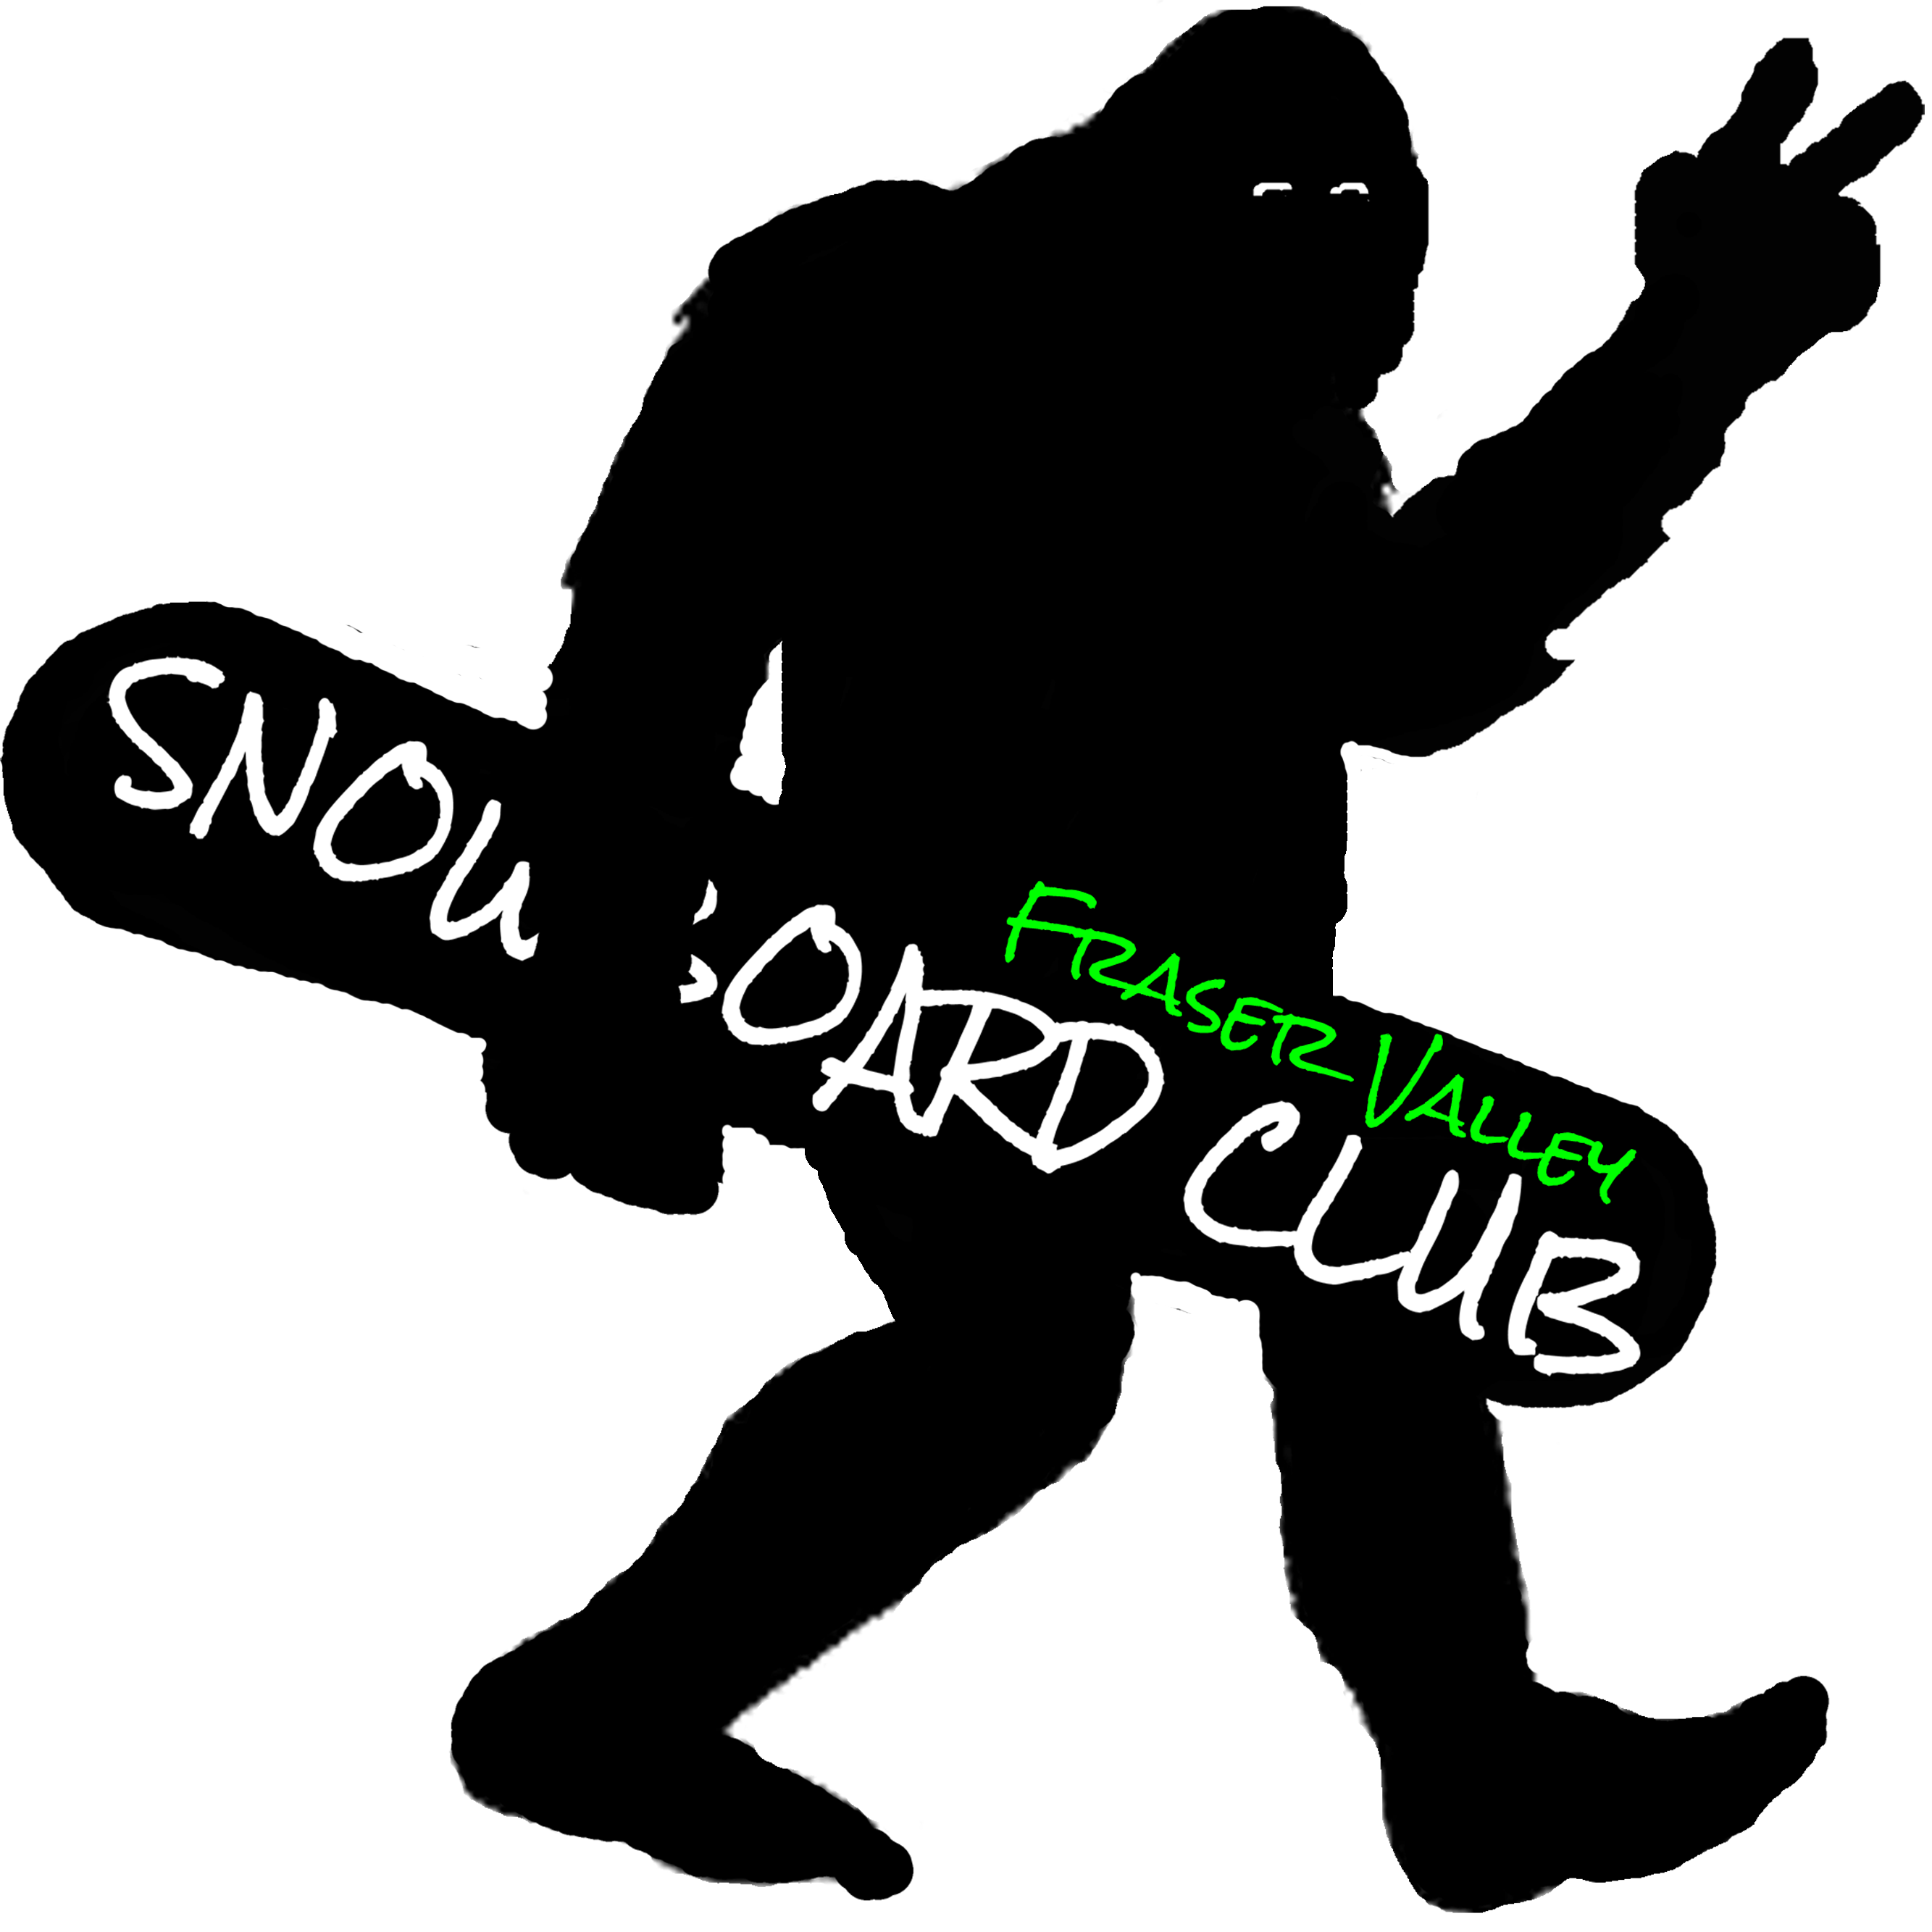 Fraser valley snowboard club. Snowboarding clipart snowboarder silhouette